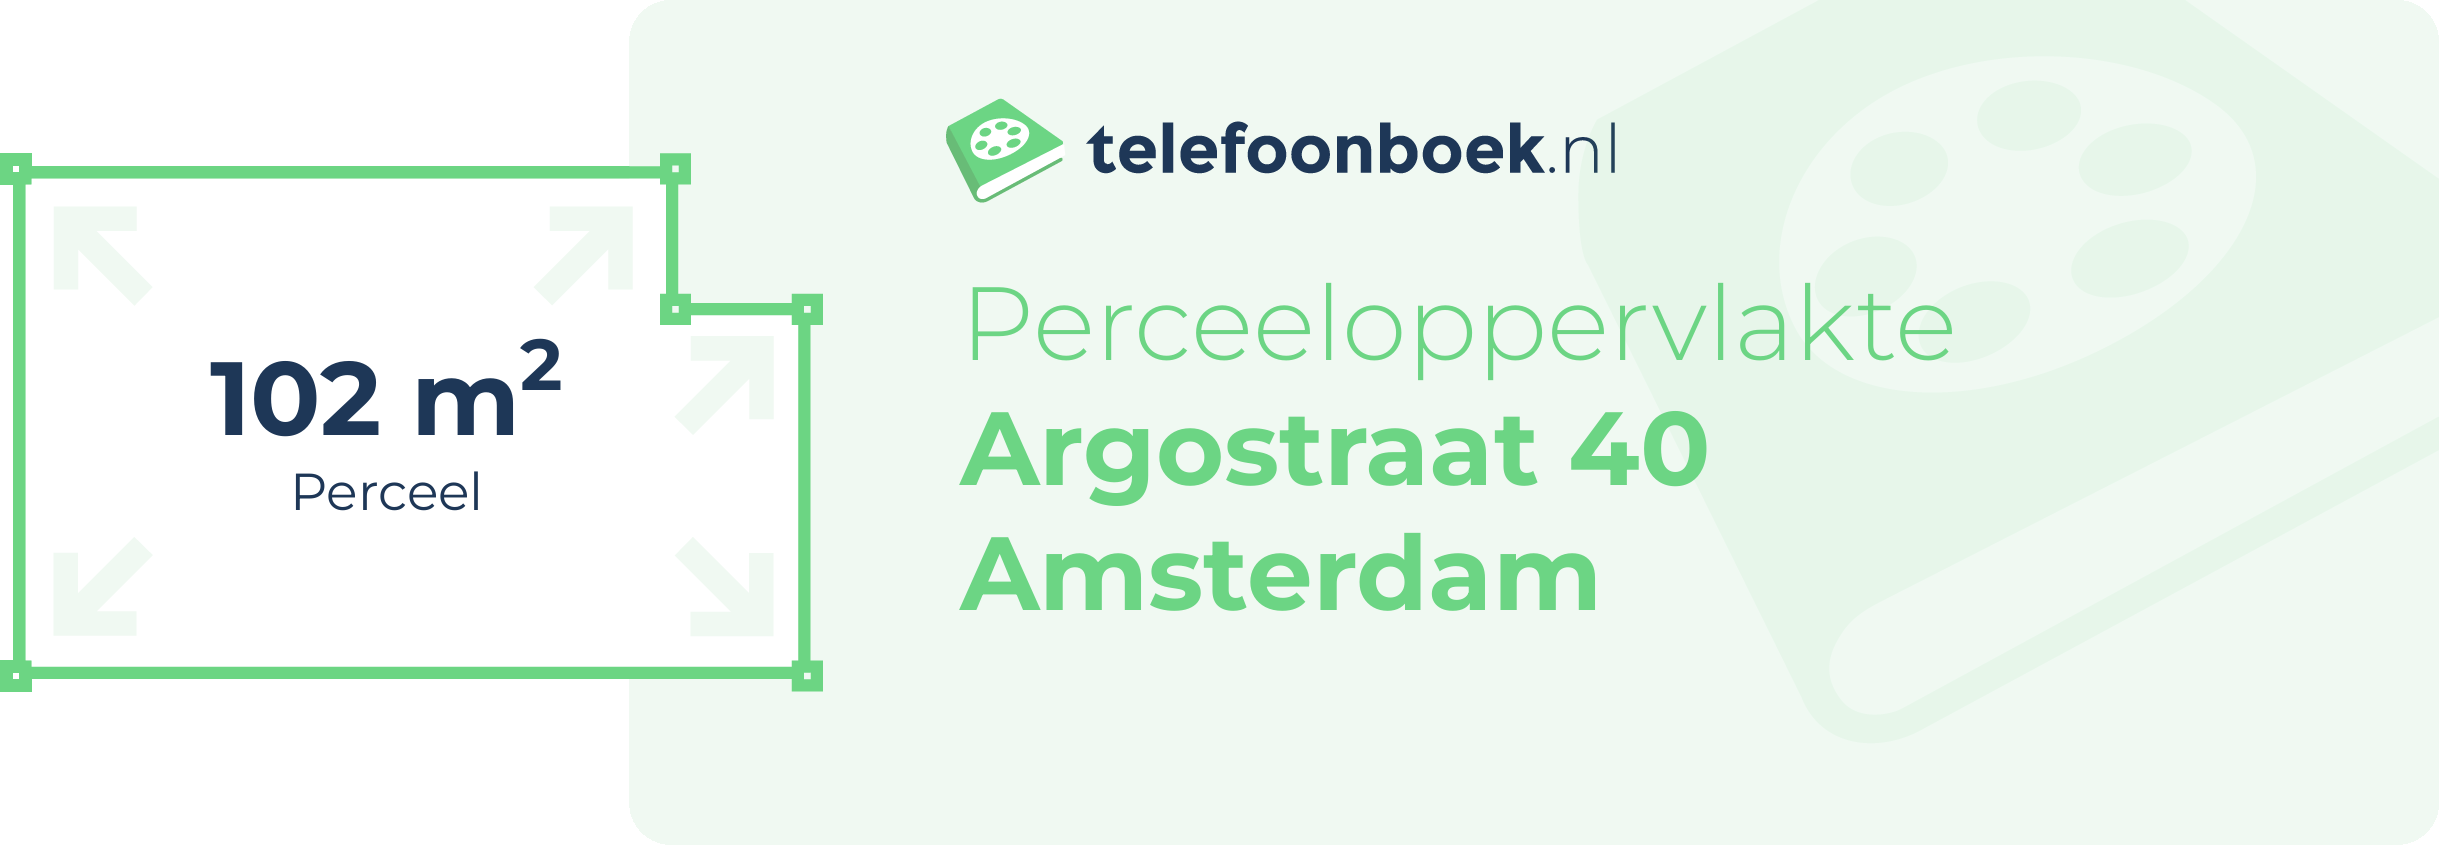 Perceeloppervlakte Argostraat 40 Amsterdam